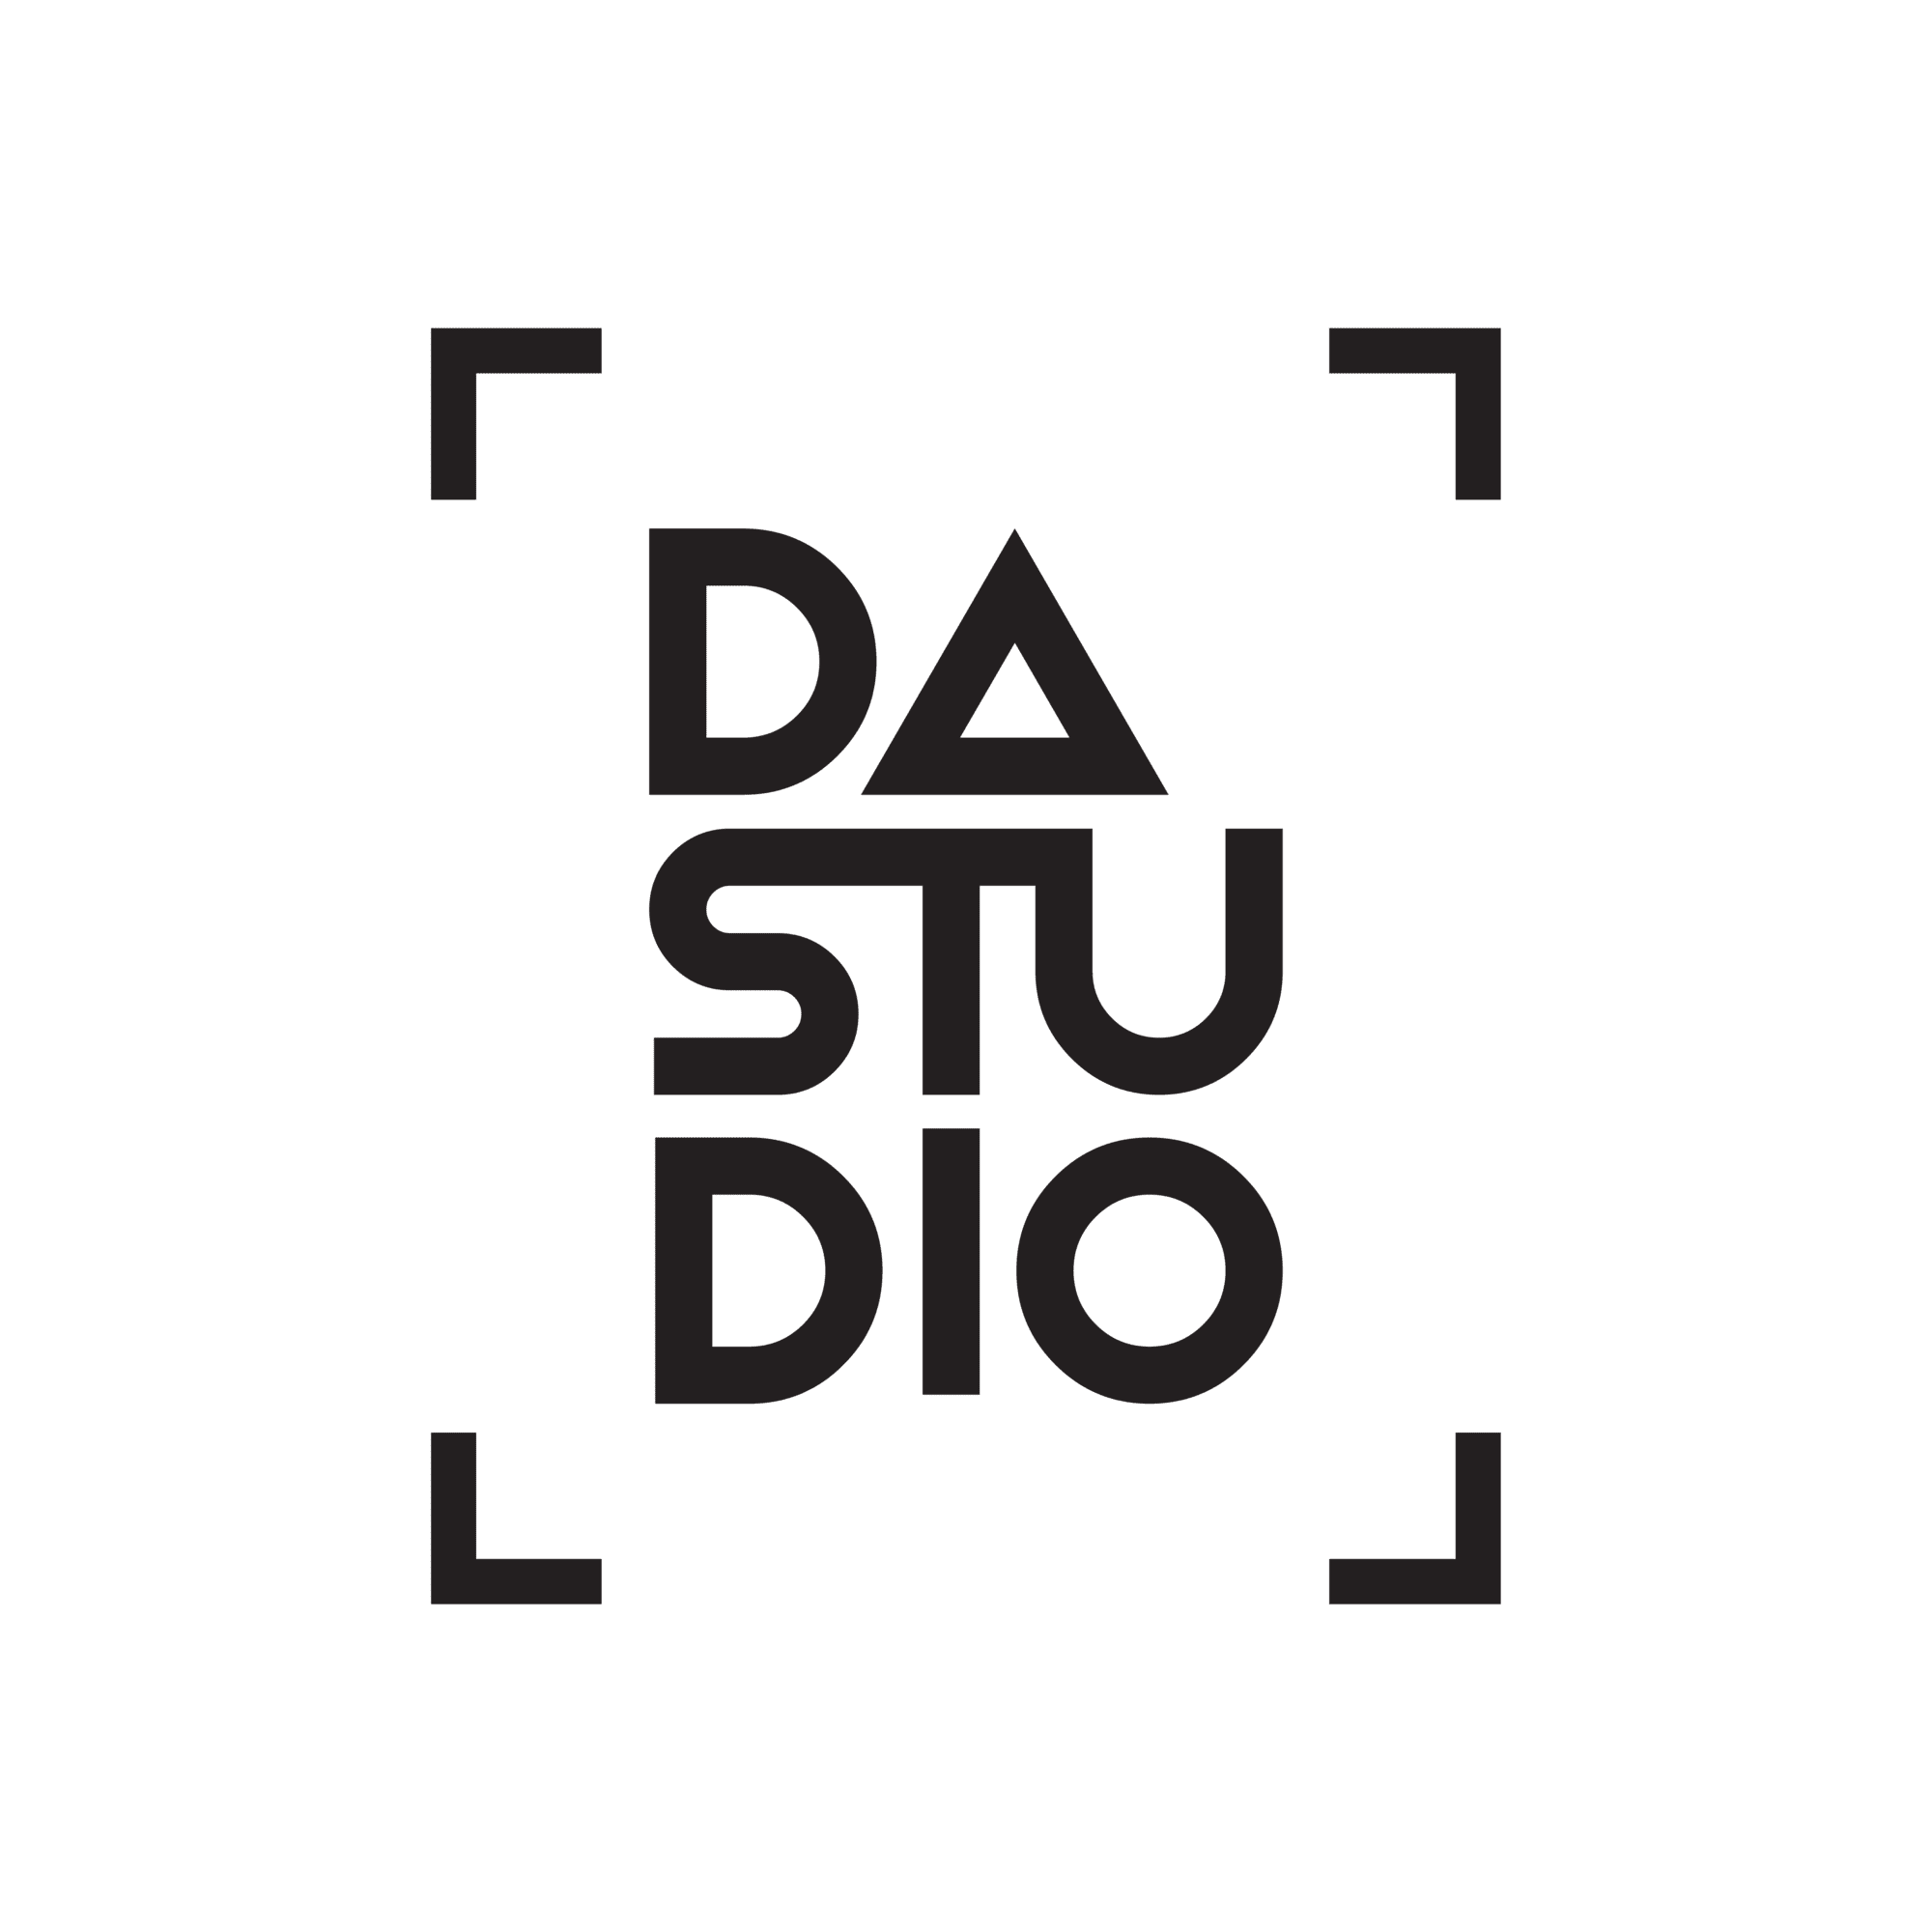 The Digital Art Studio